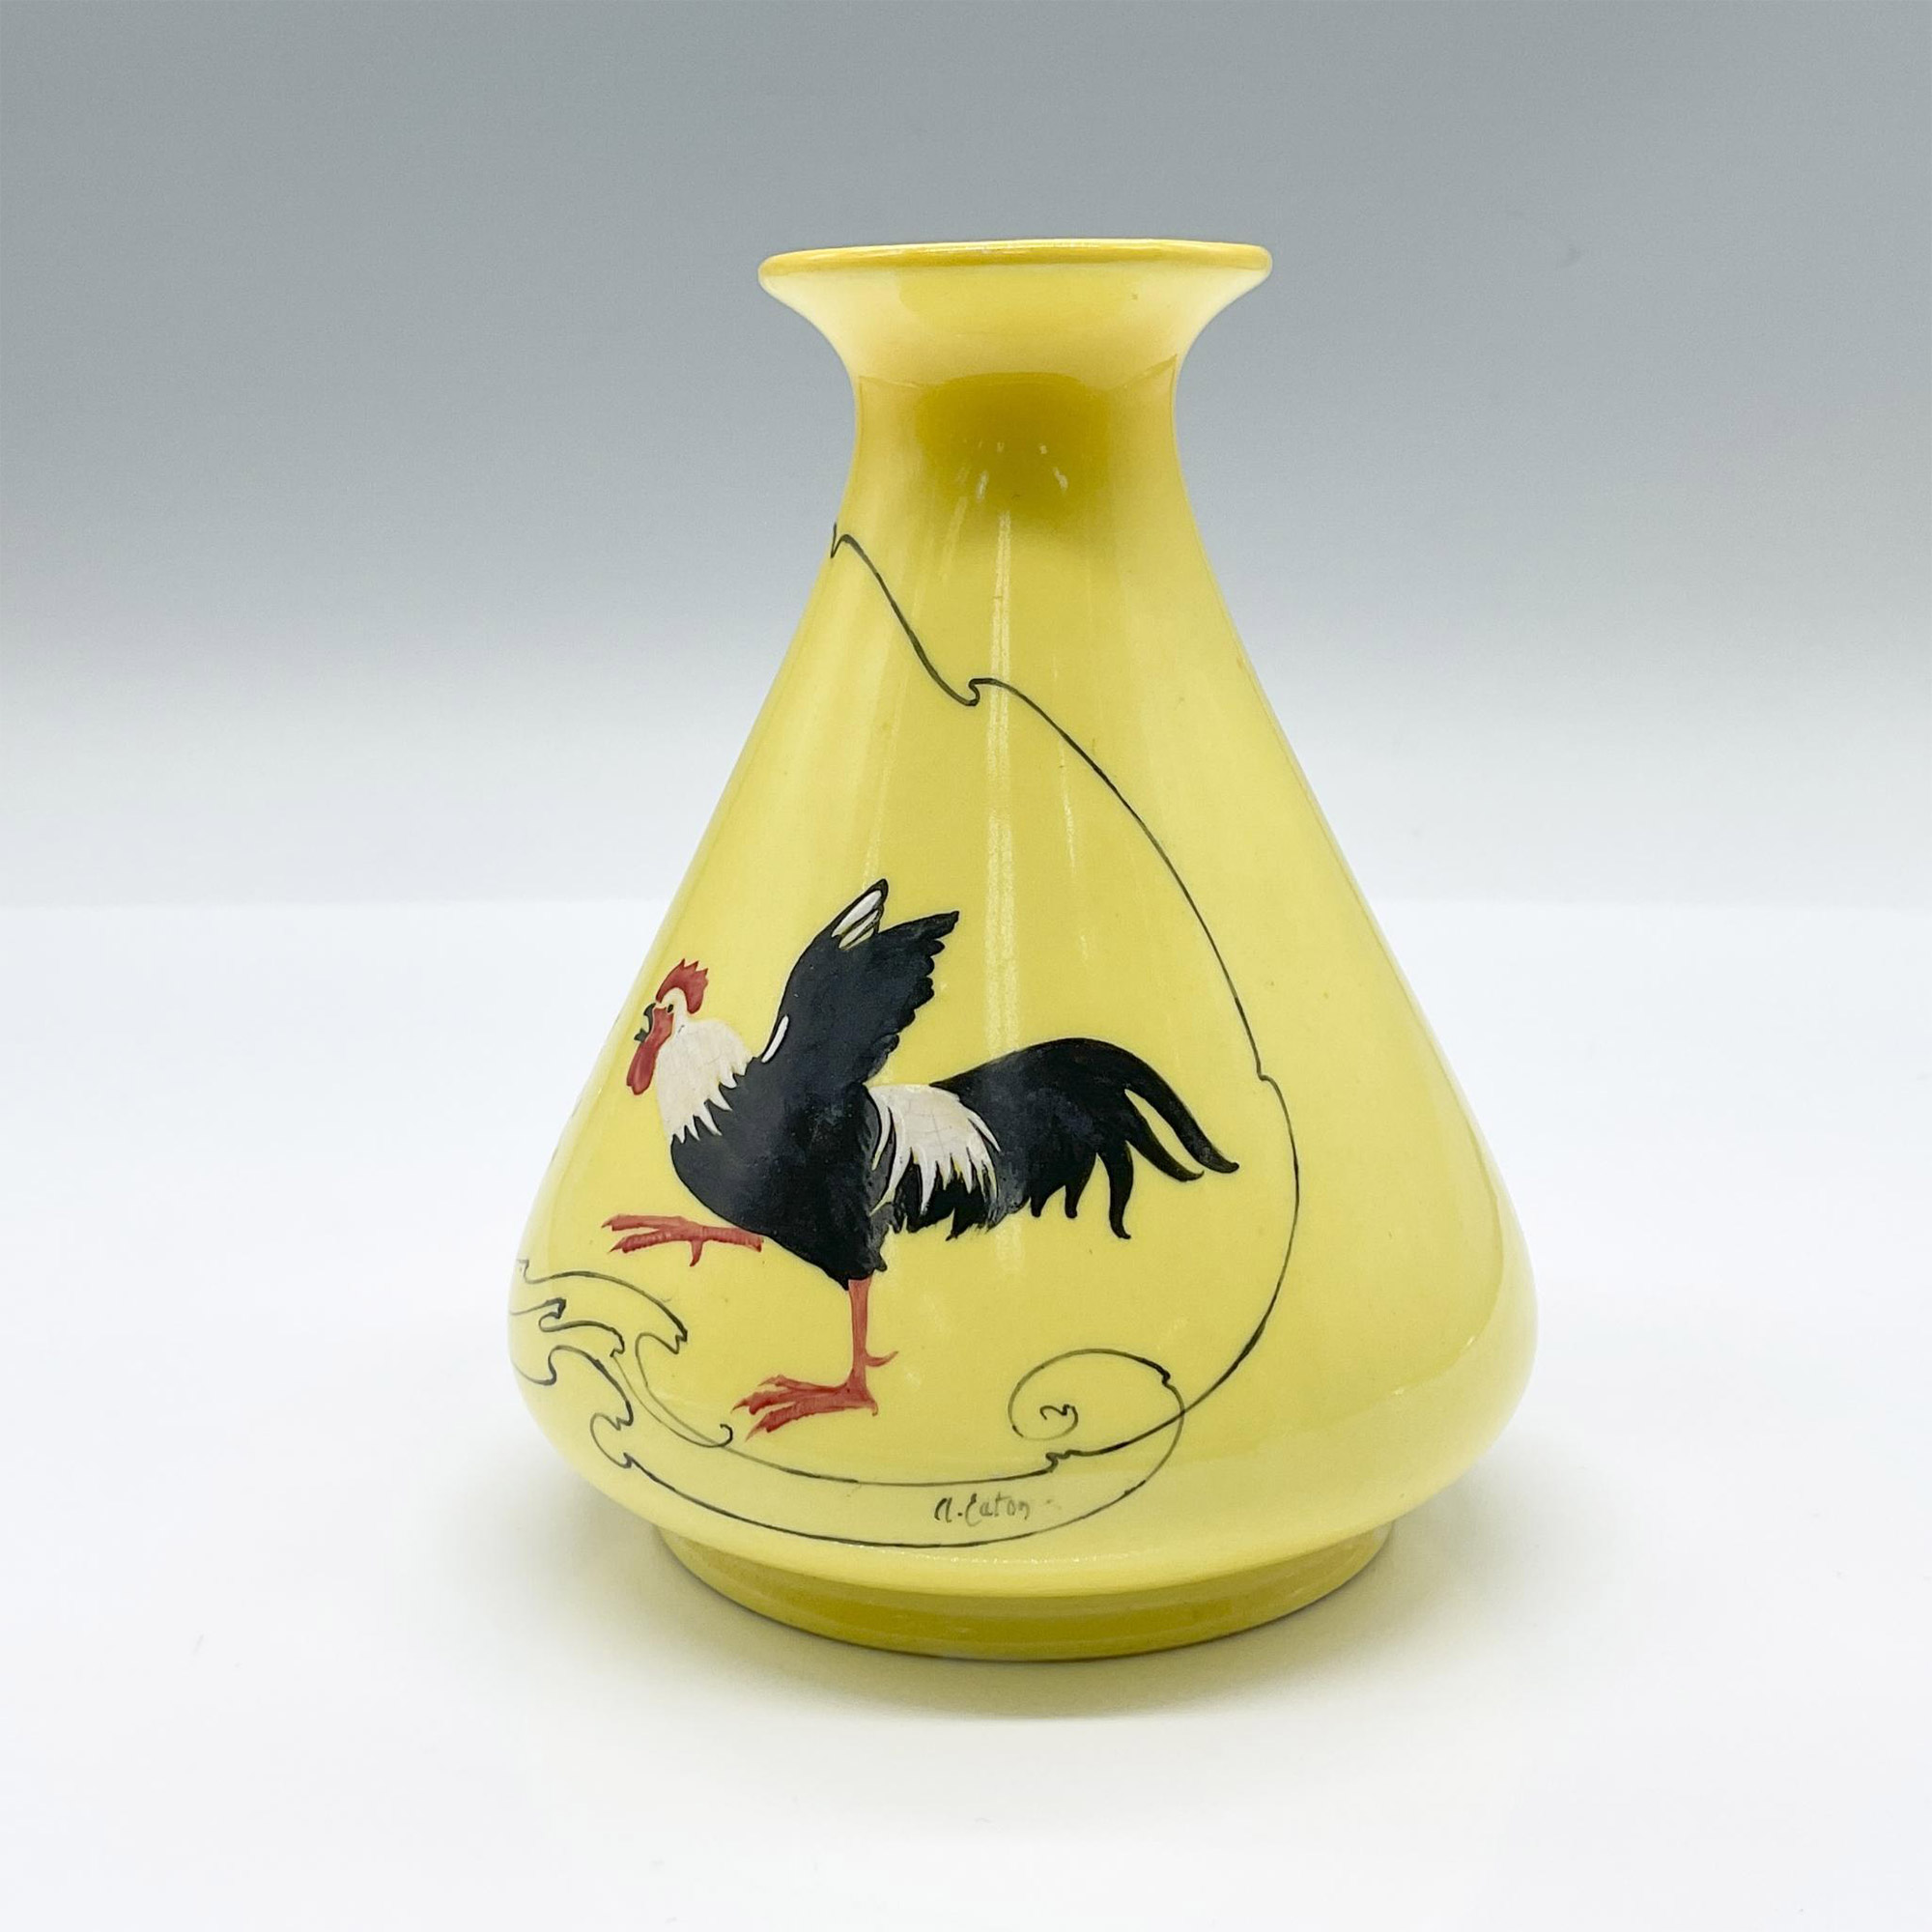 Royal Doulton Arthur Eaton Porcelain Vase - Image 2 of 4